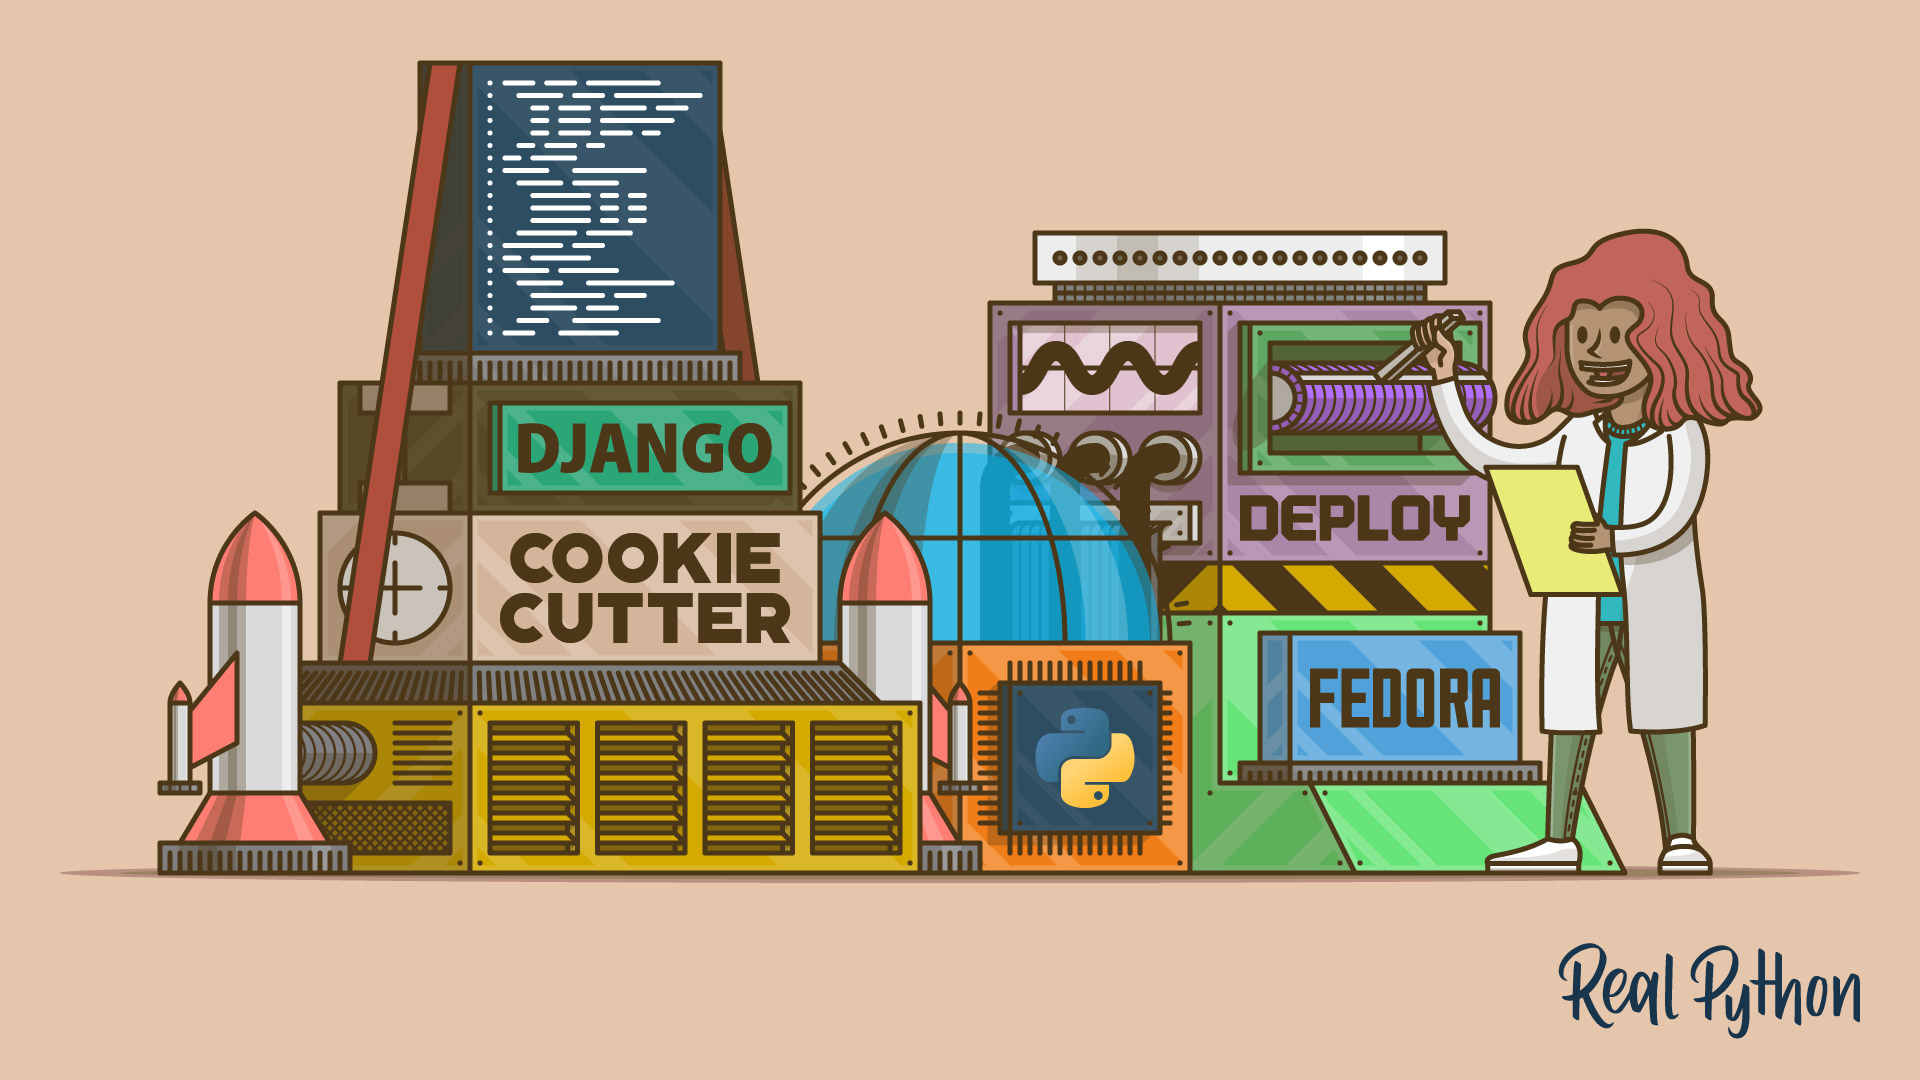 Development and Deployment of Django on Fedora